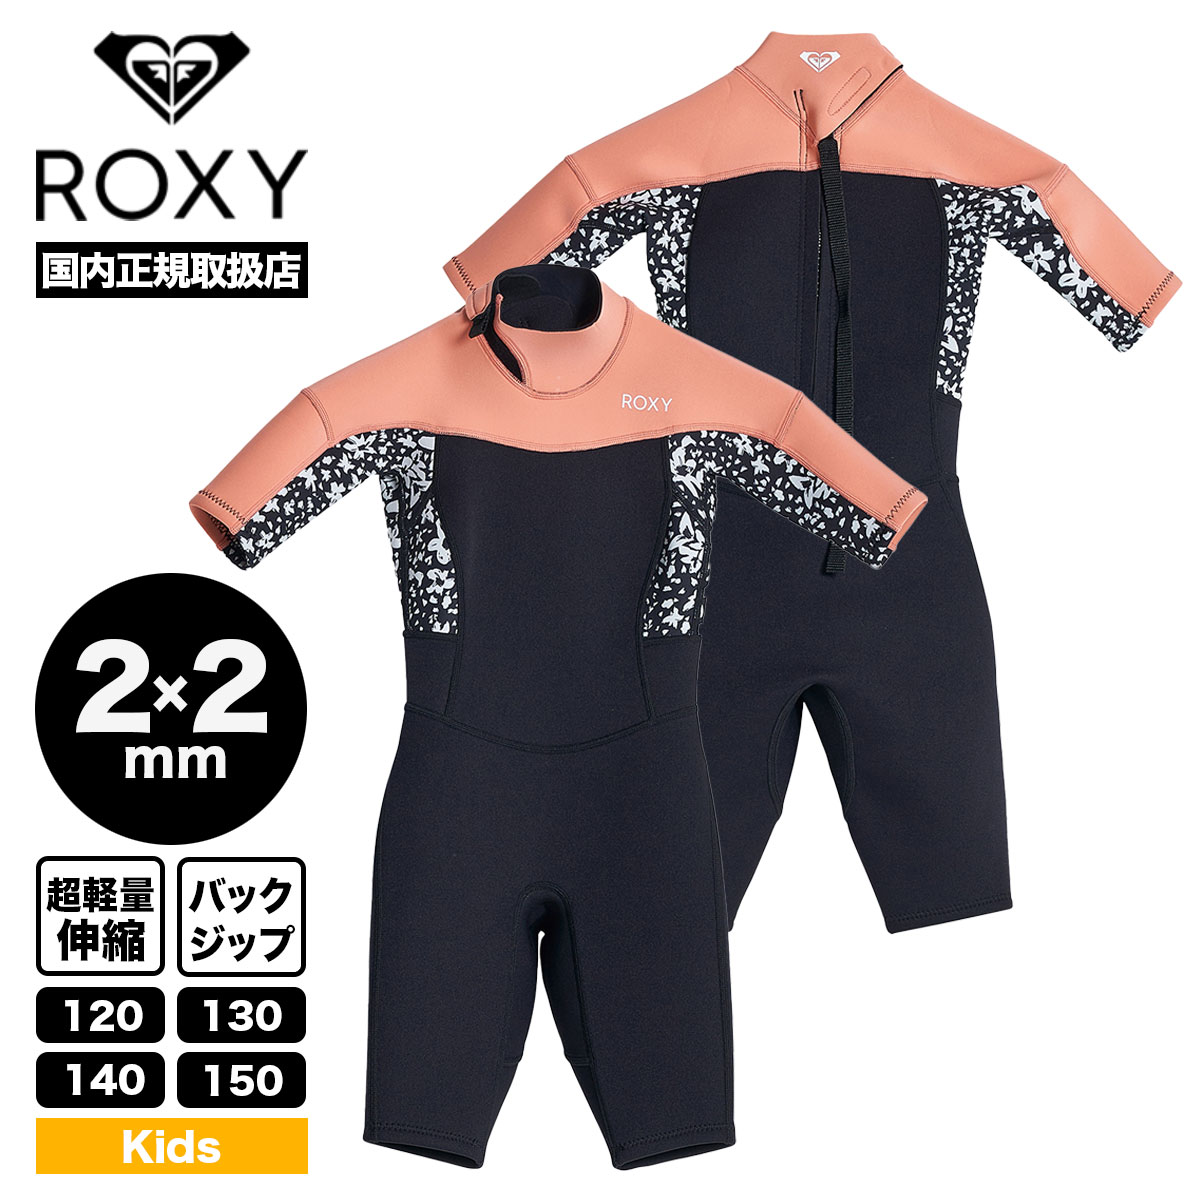 ROXY キッズ ウェットスーツ スプリング 2×2mm 120cm-150cm 海 人気ブランド ...